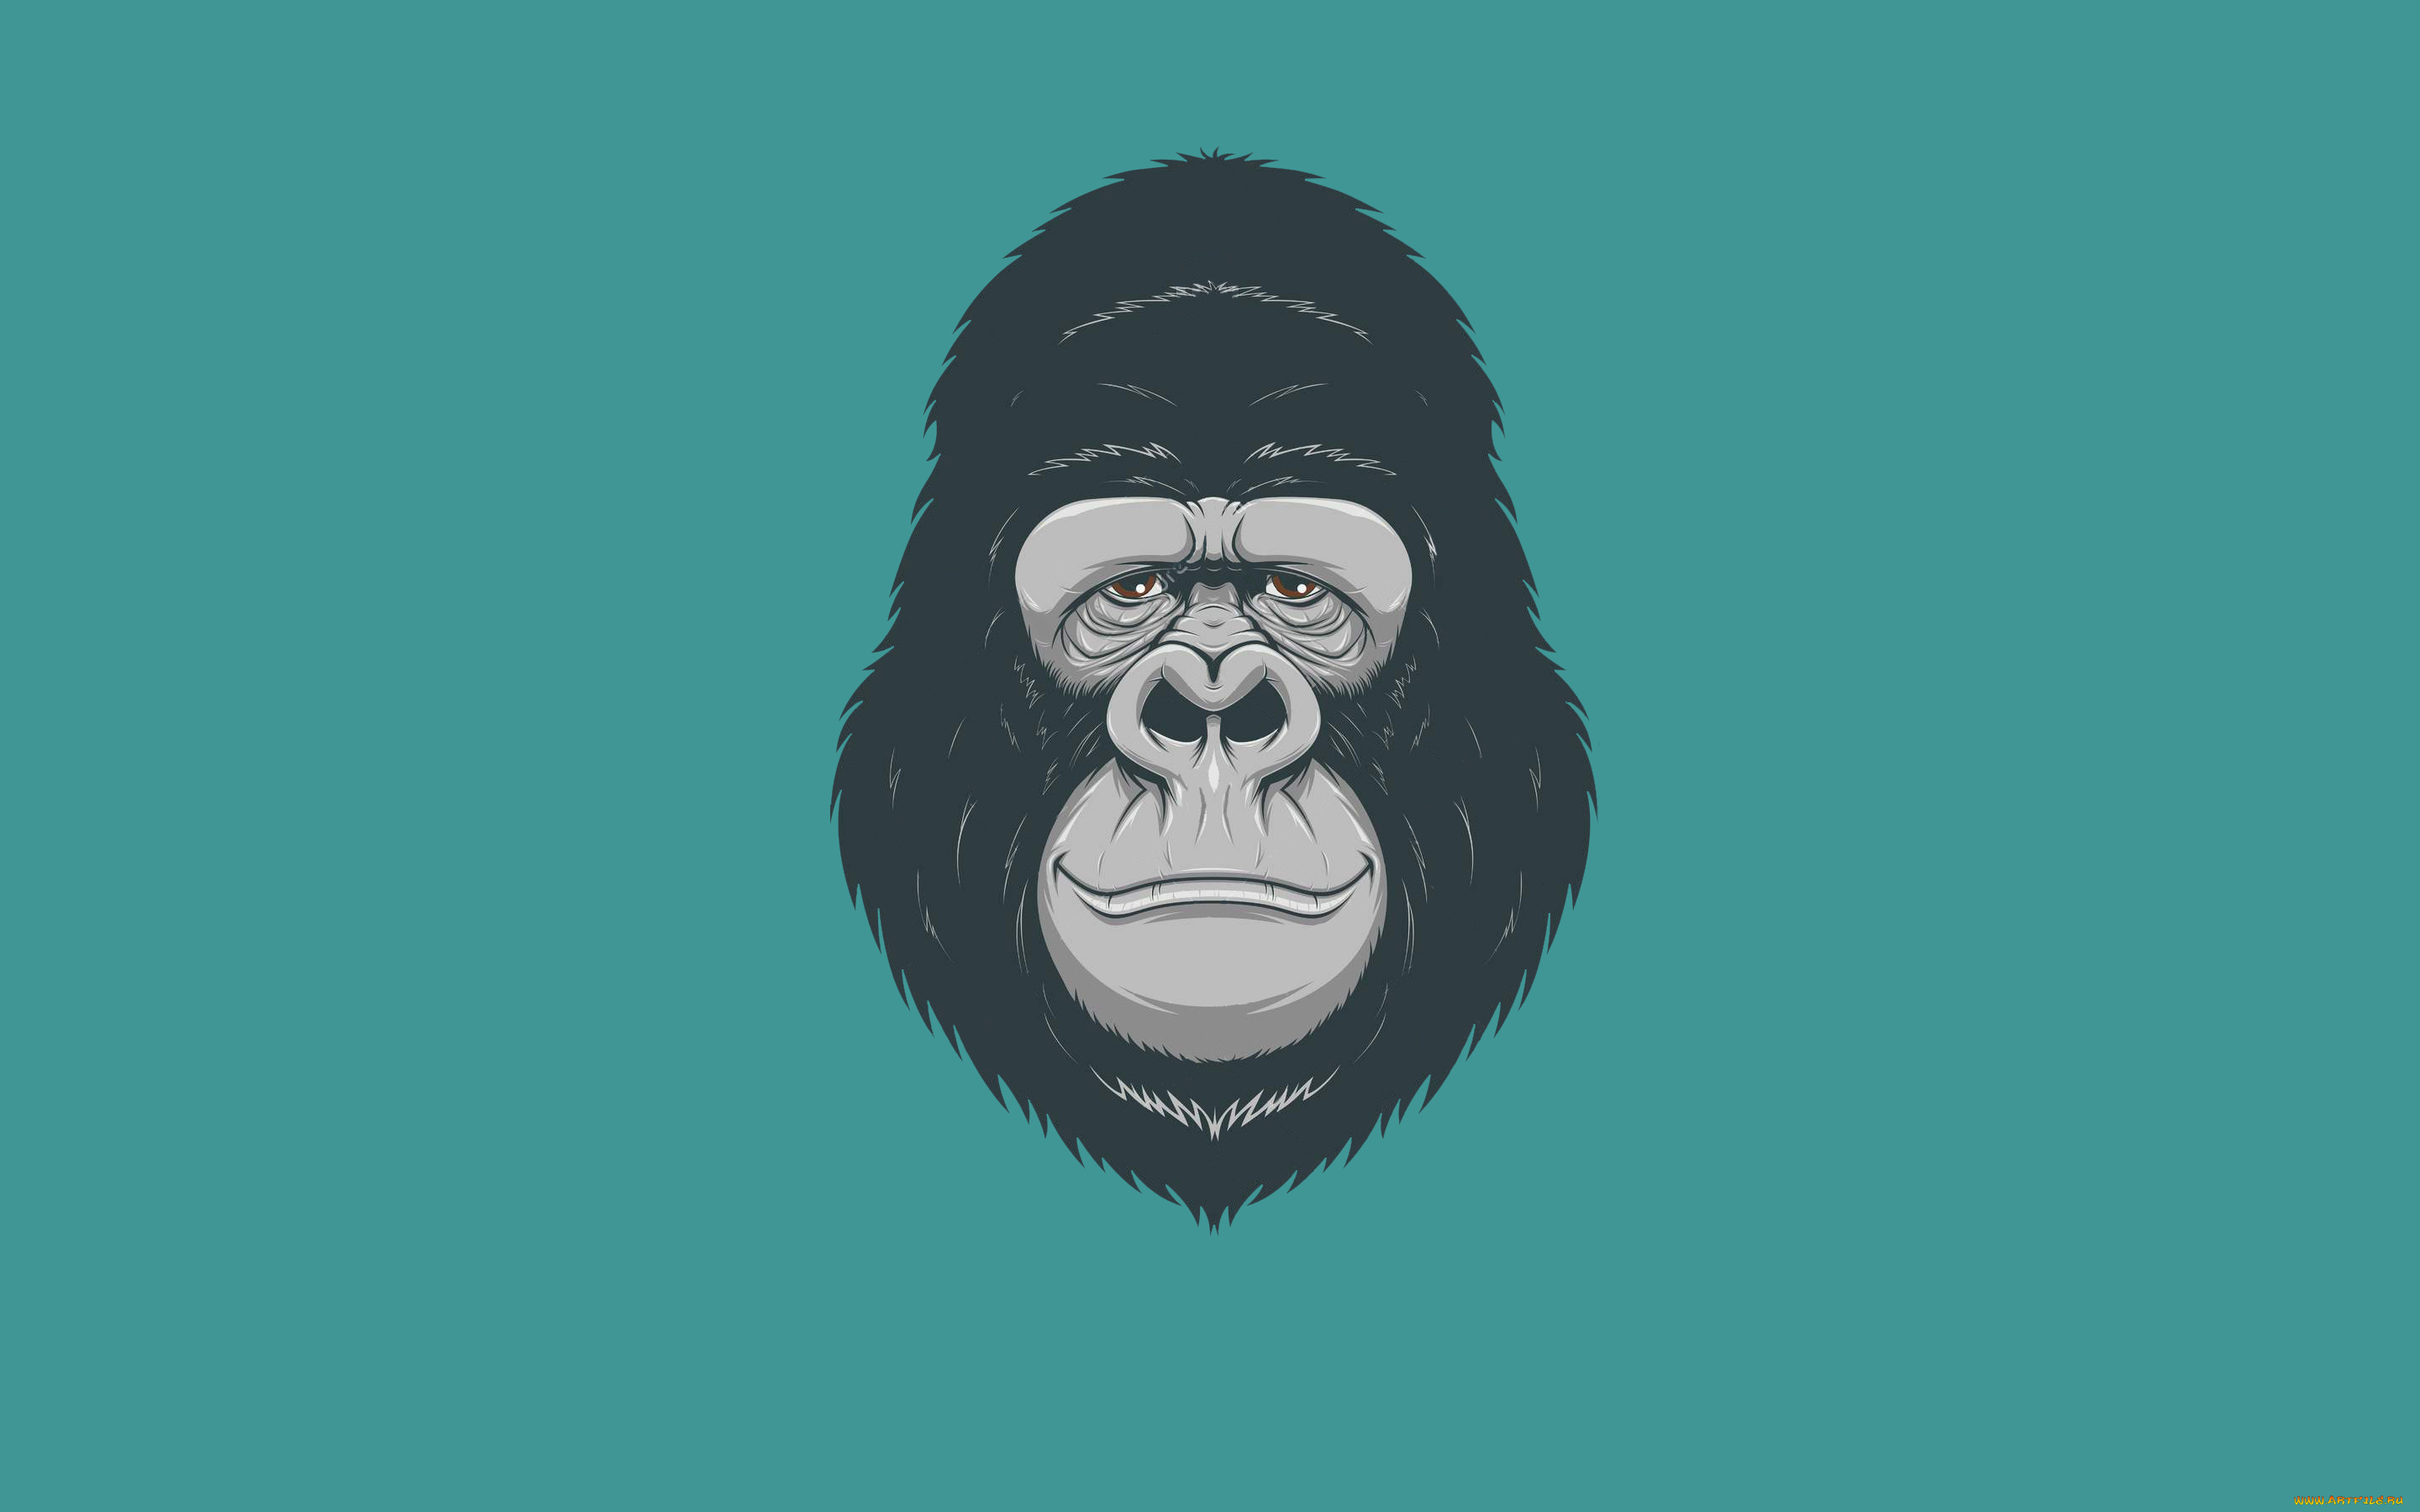 рисованное, минимализм, обезьяна, monkey, голова, gorilla, горилла